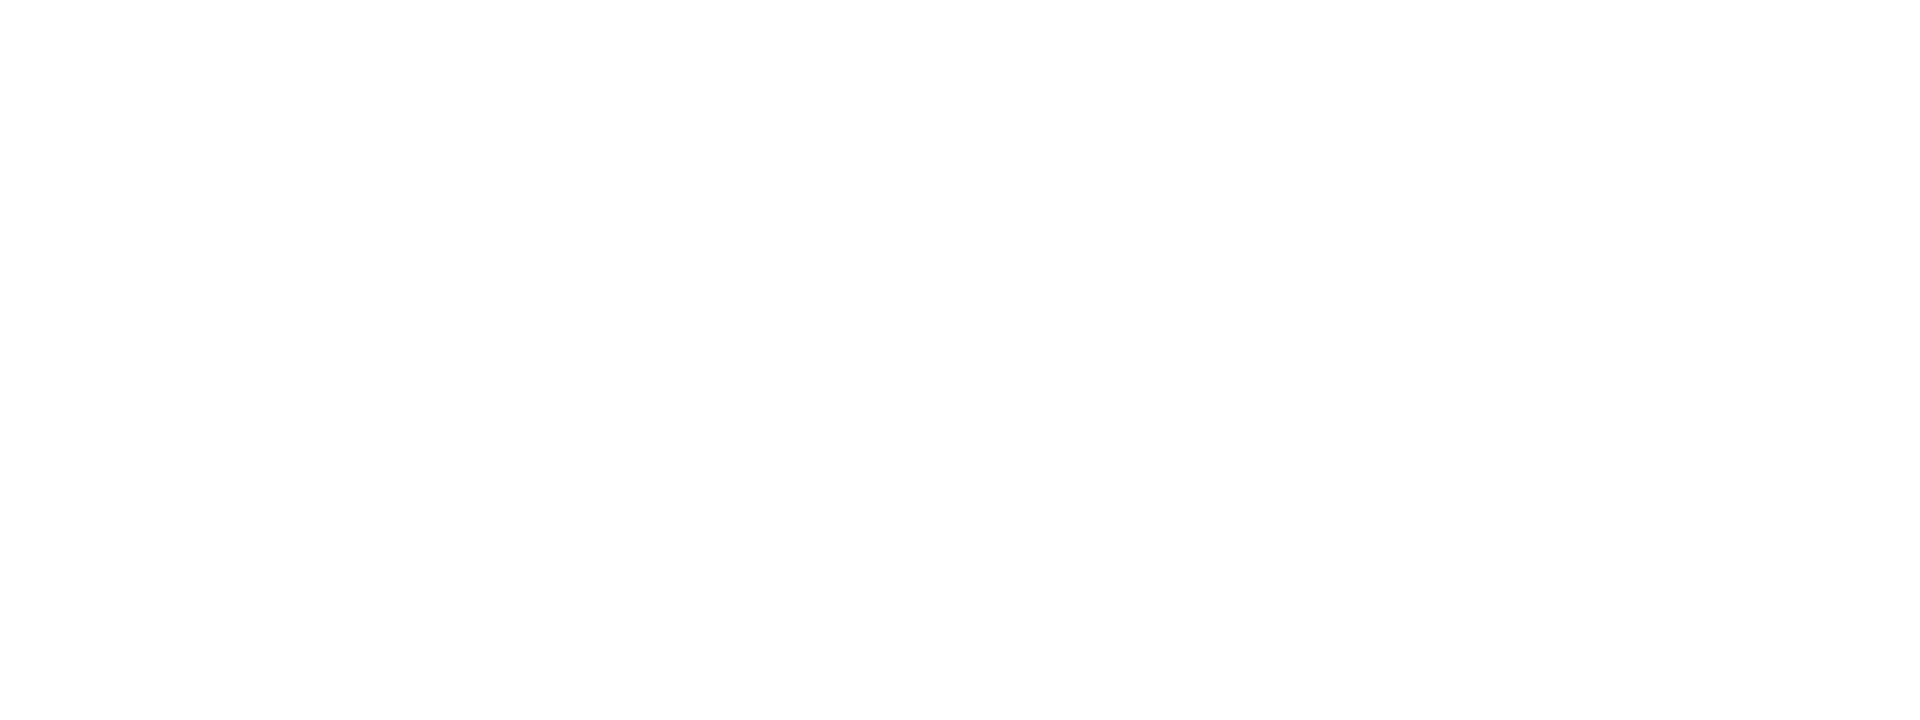 efectdigital logo